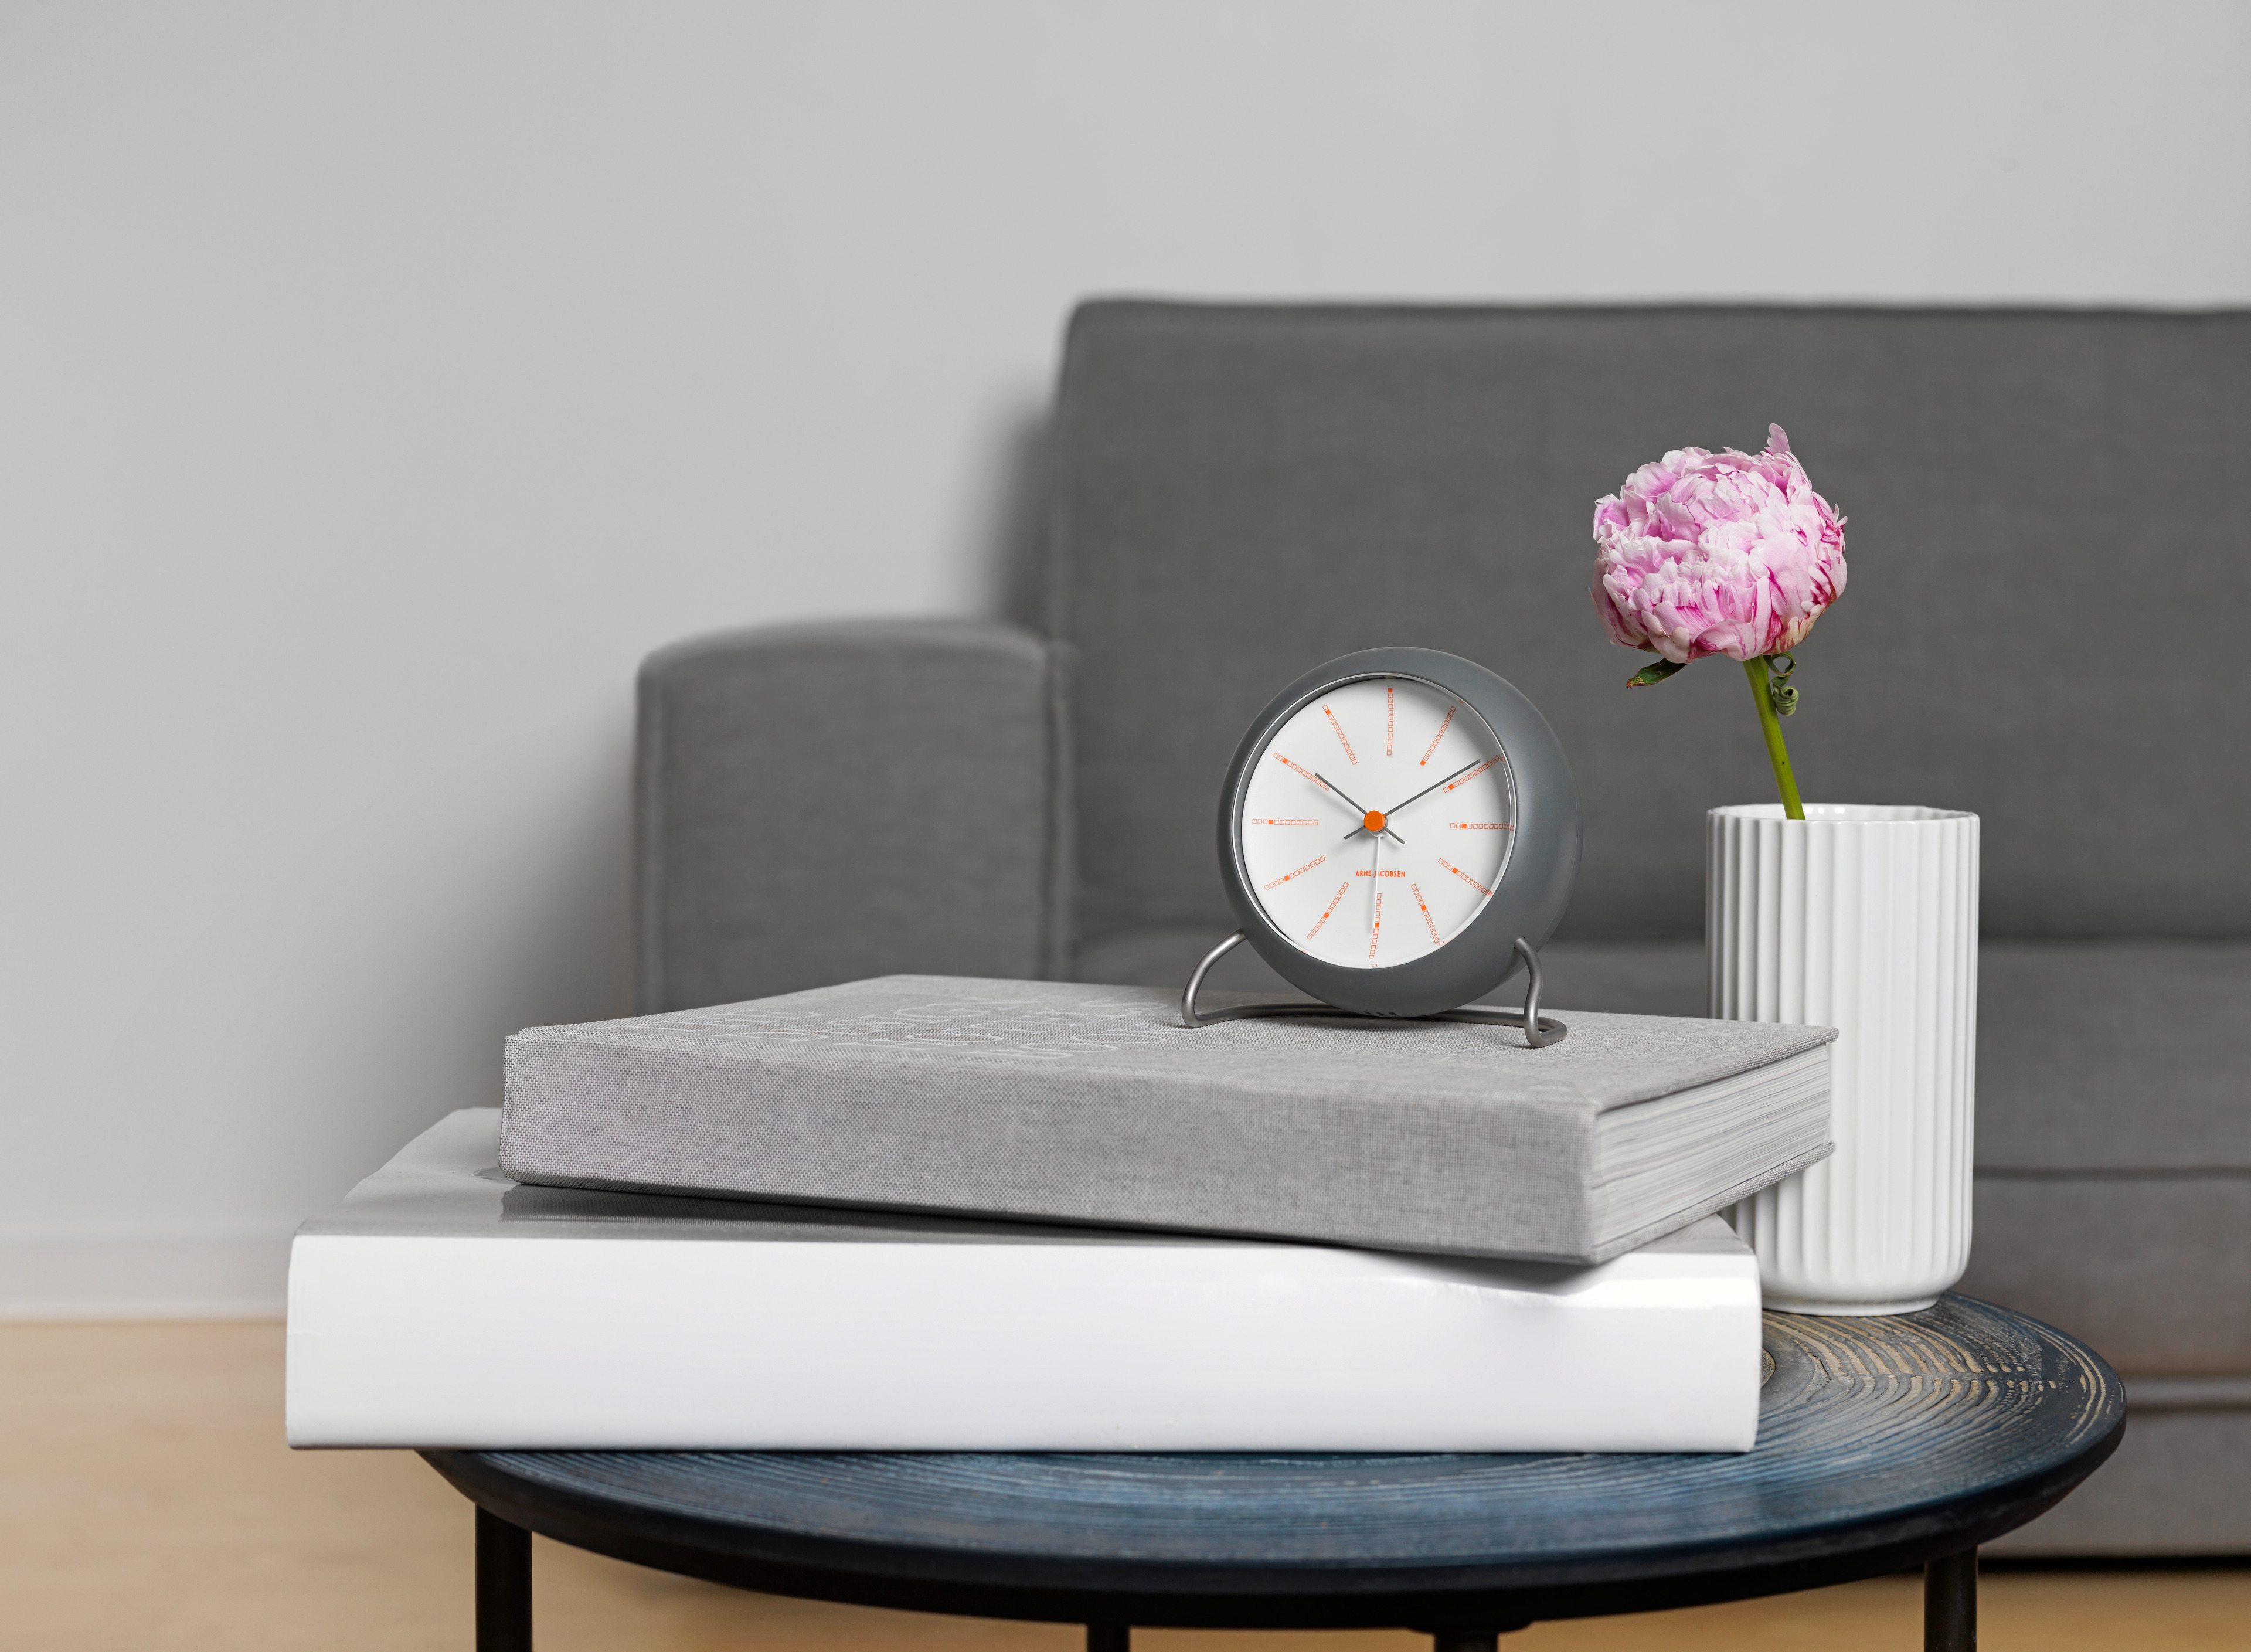 Alarm clock from Arne Jacobsen Clocks on coffee table